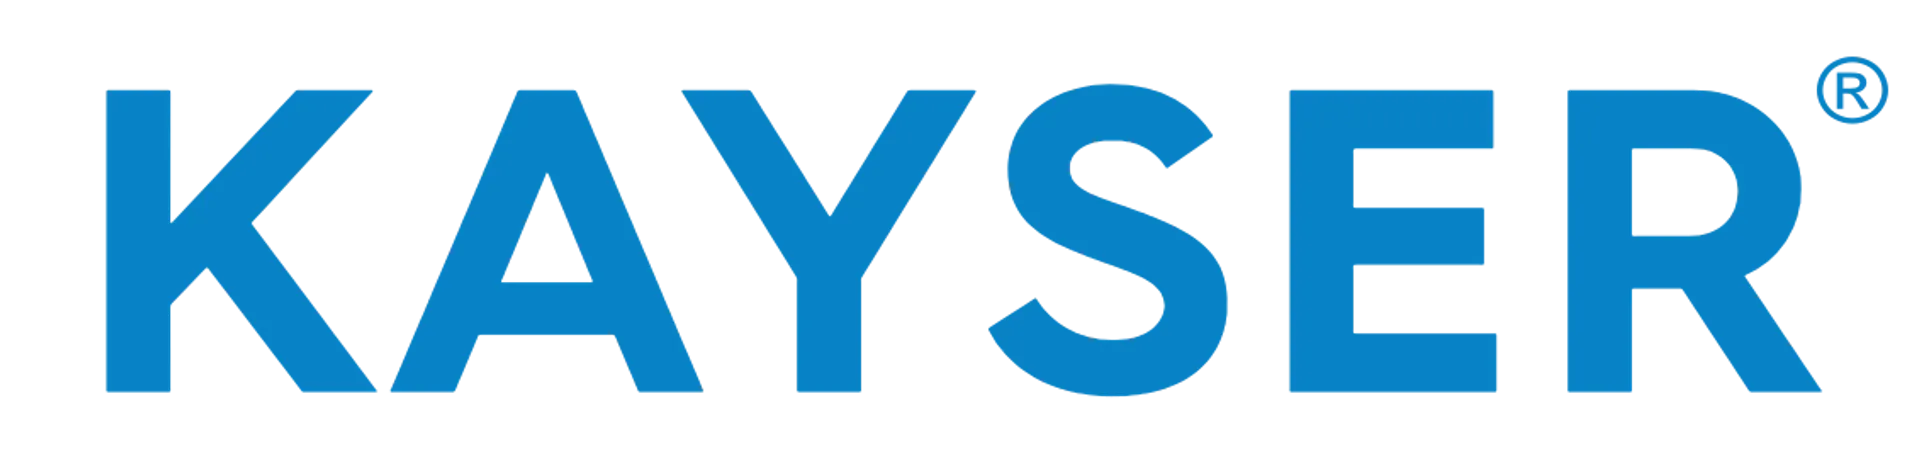 KAYSER logo